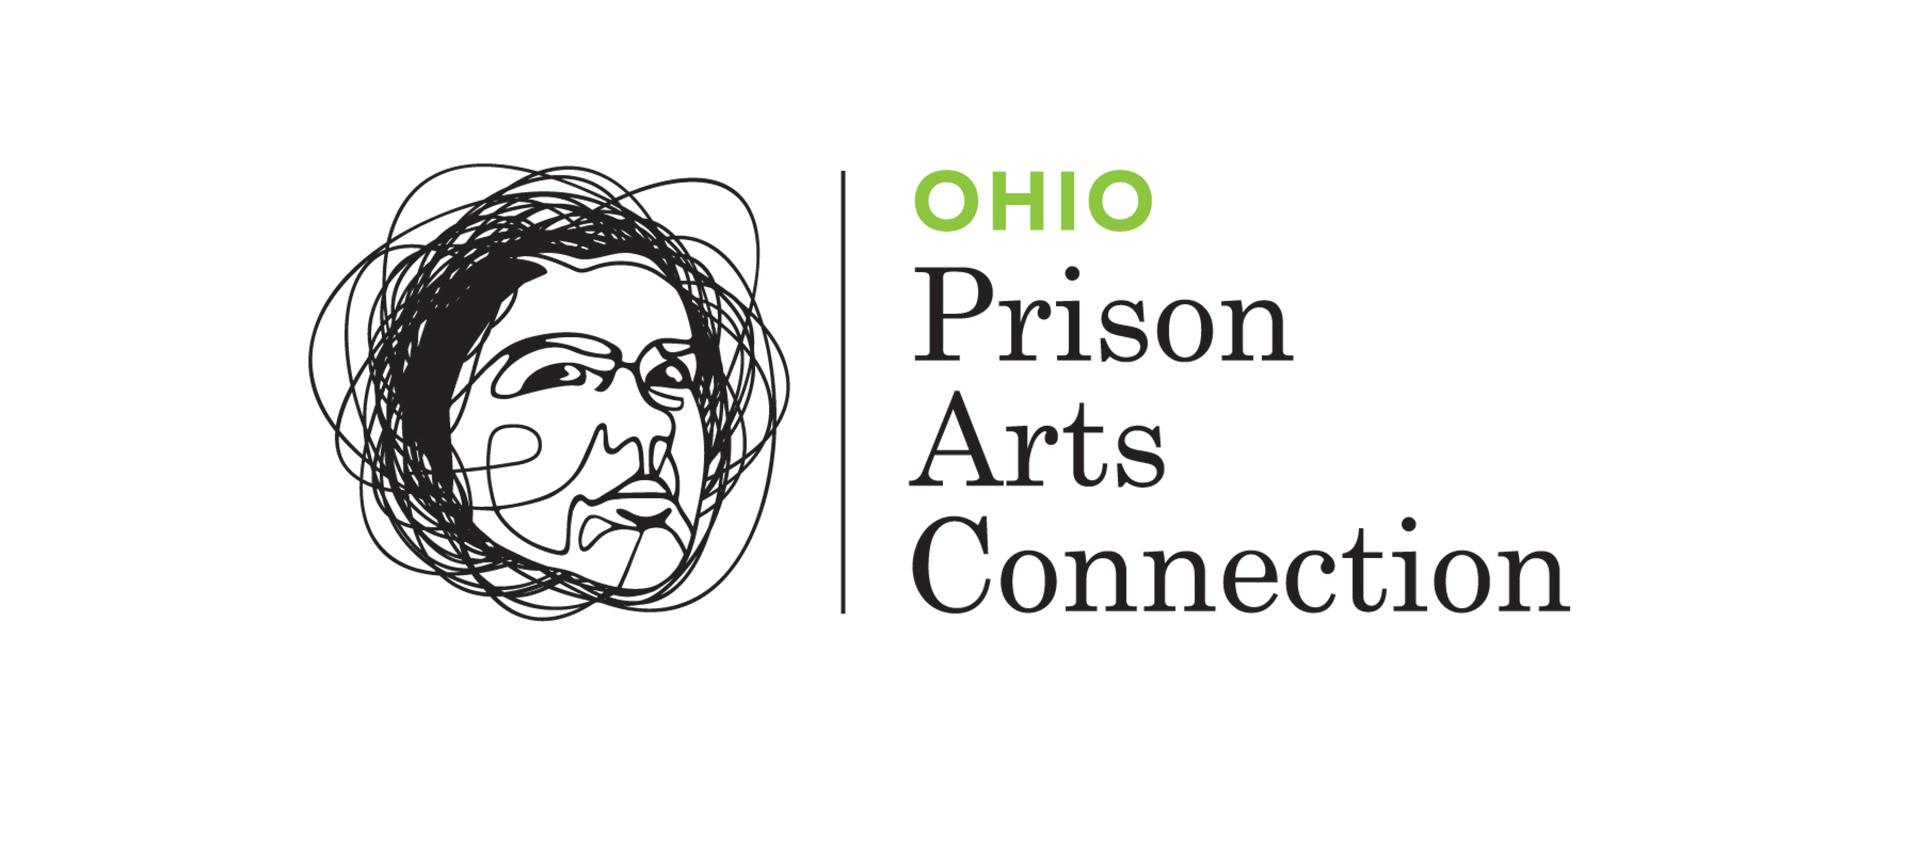 Ohio Prison Arts Connection